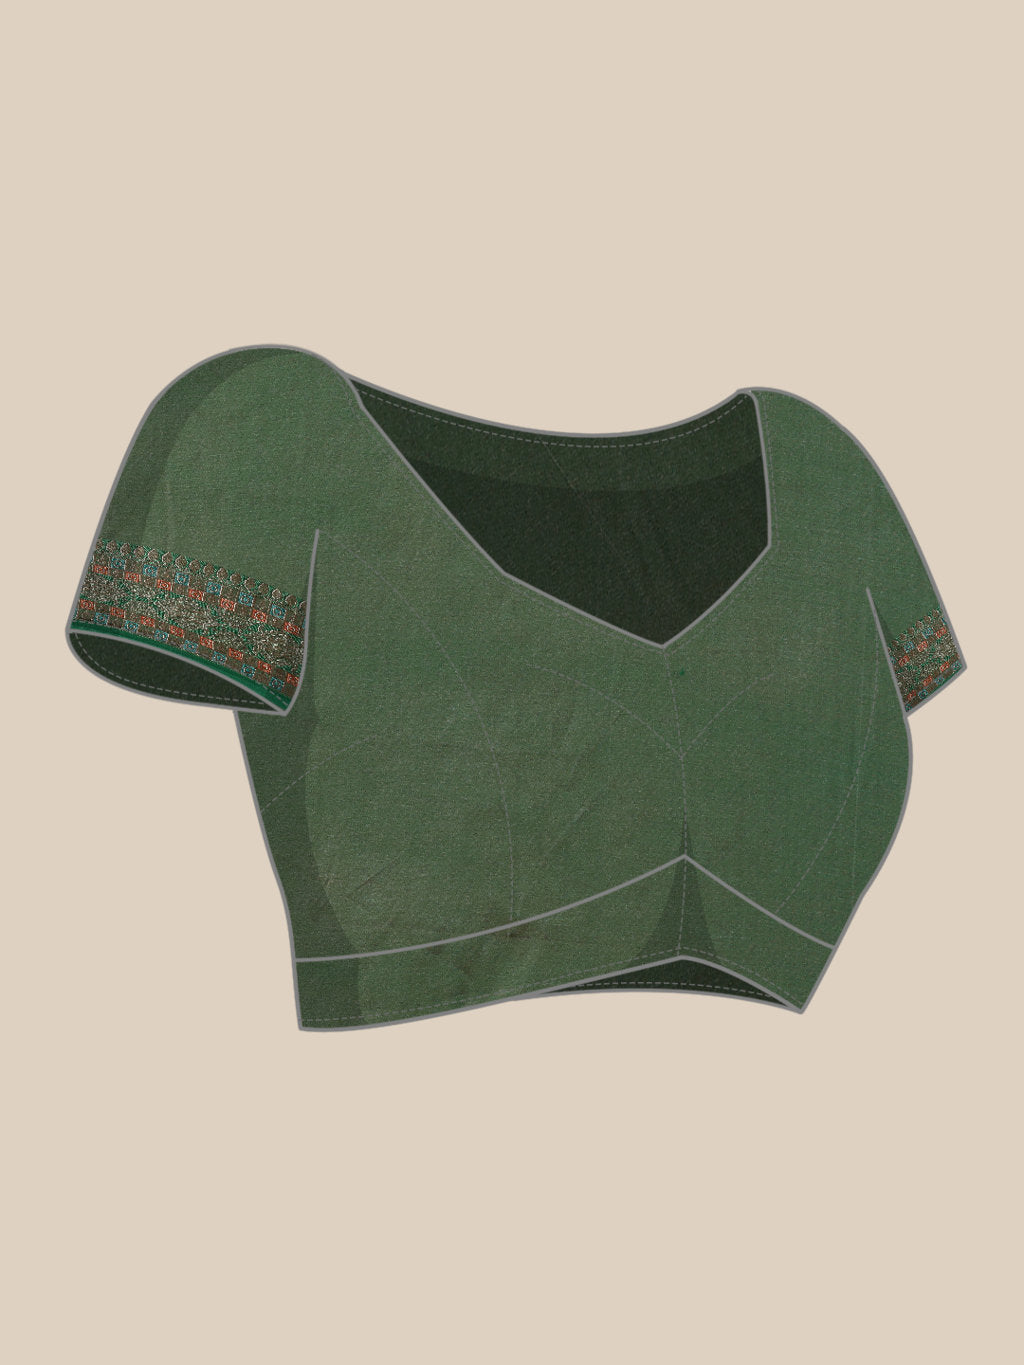 Women's Magenta Silk Woven Work Traditional Tassle Saree - Sangam Prints